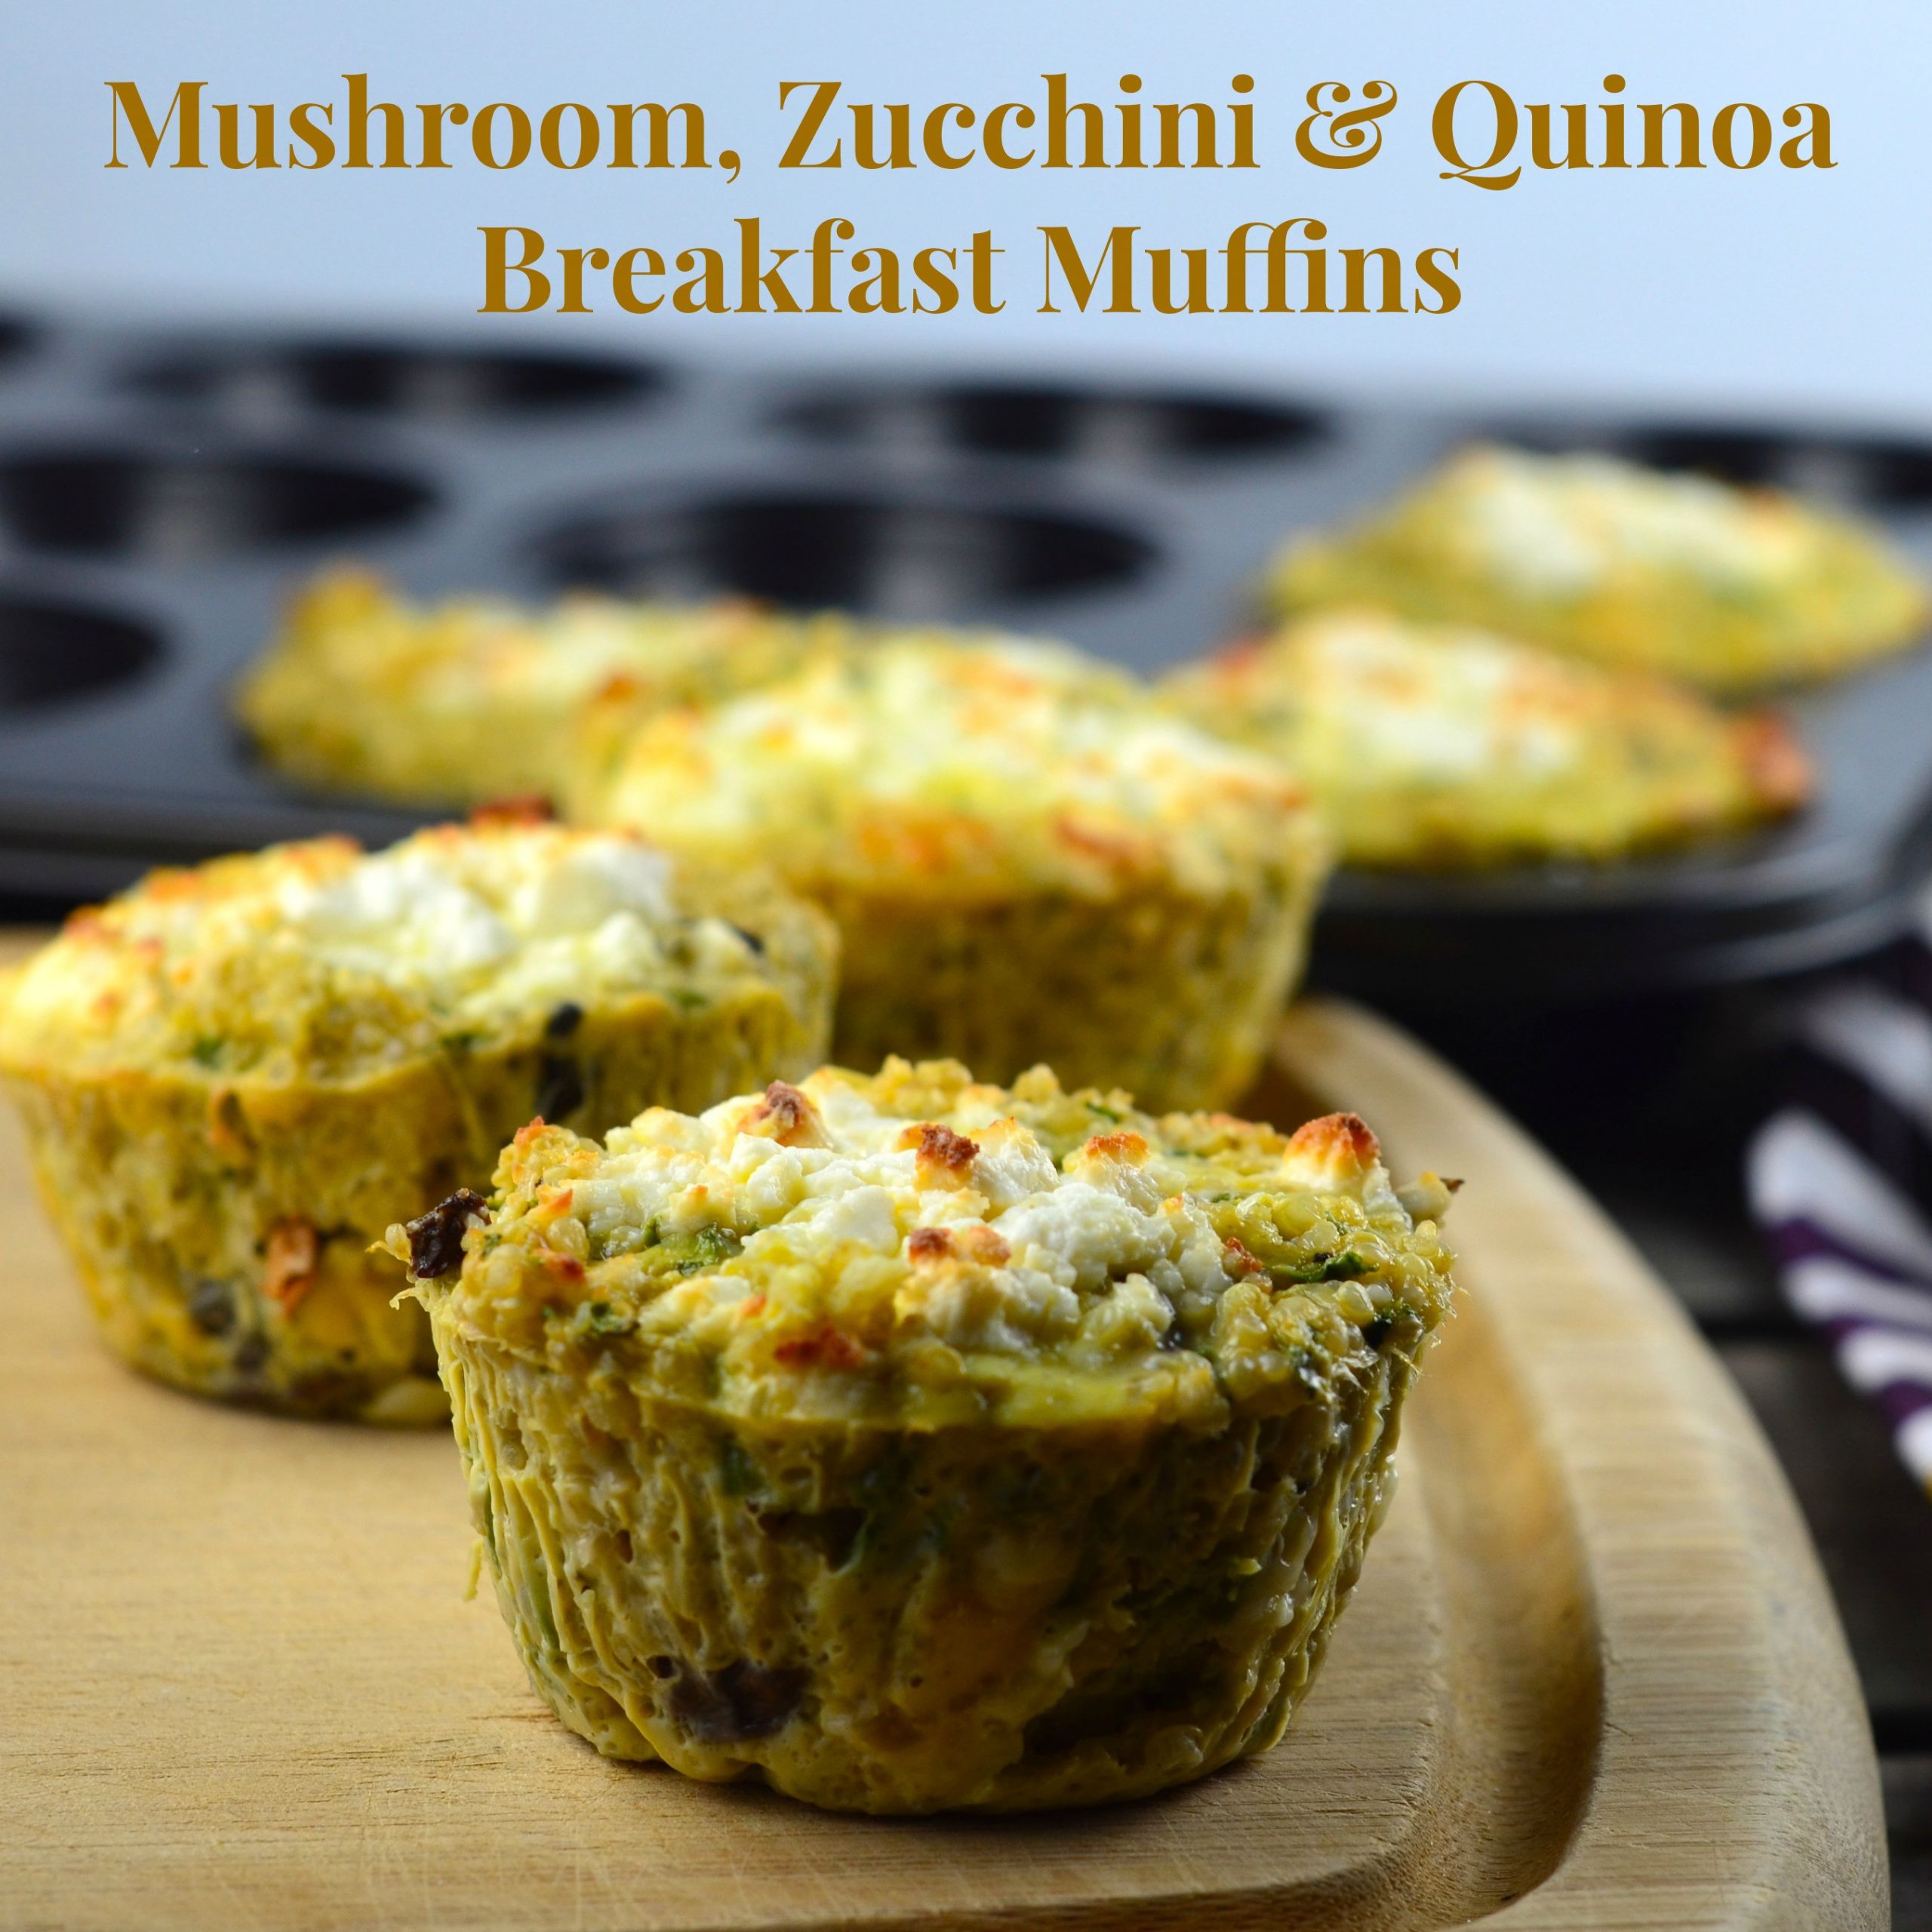 Zucchini Breakfast Recipes
 Passover Recipes Mushroom Zucchini & Quinoa Breakfast